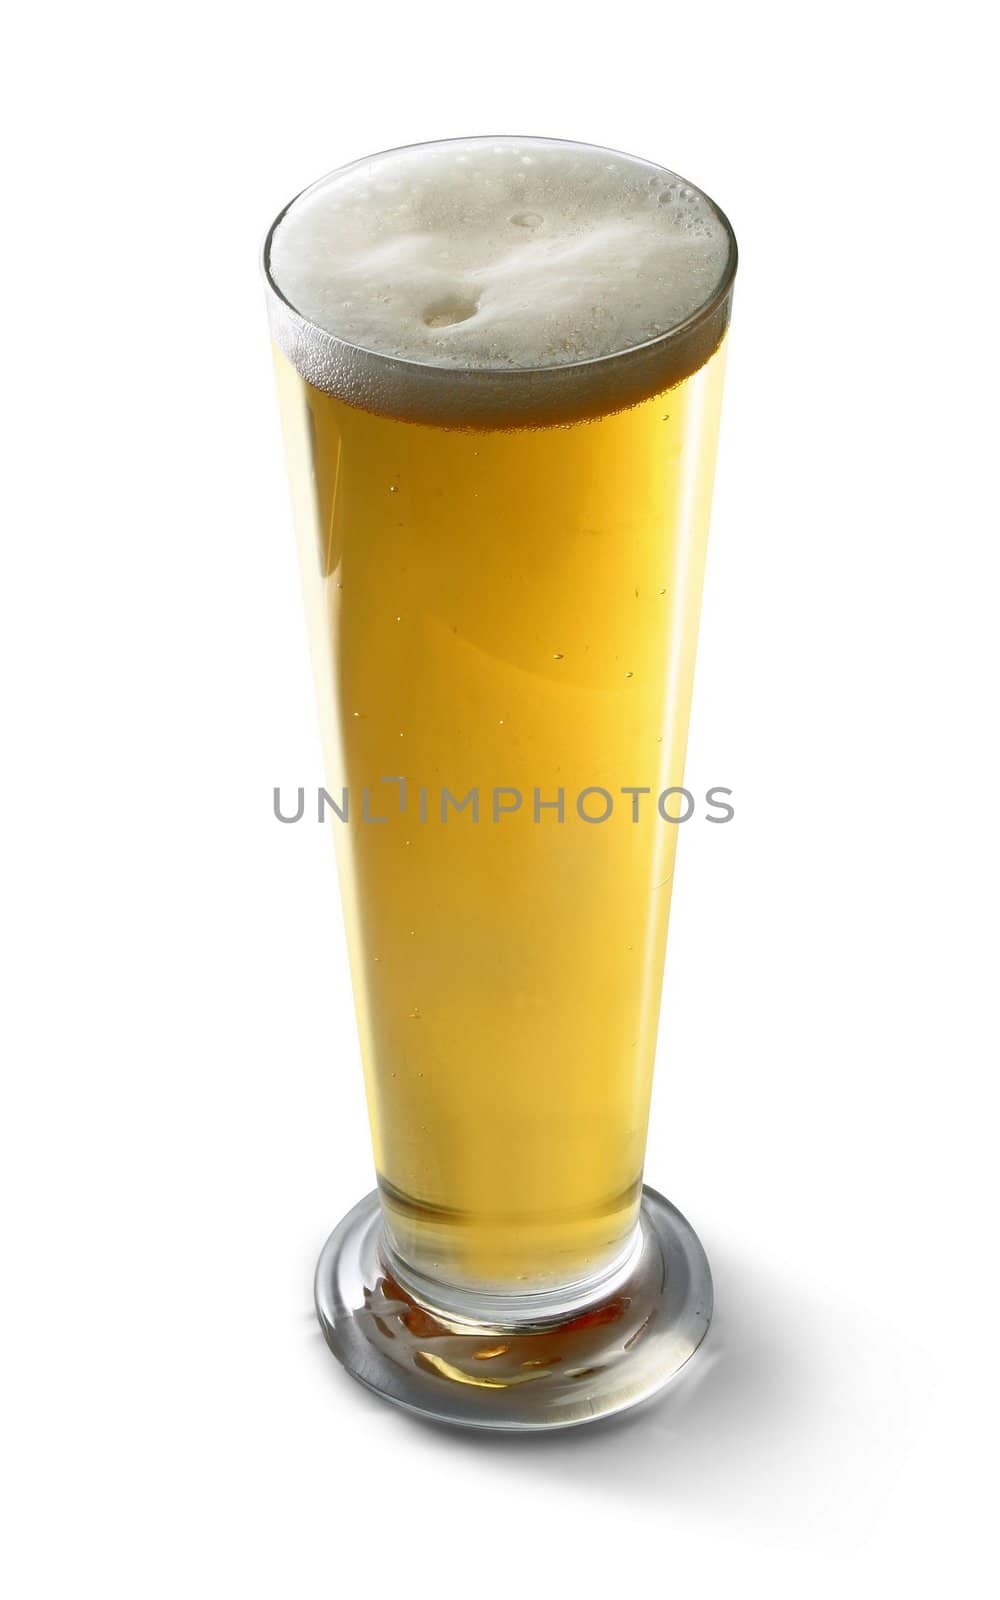 glass of light beer